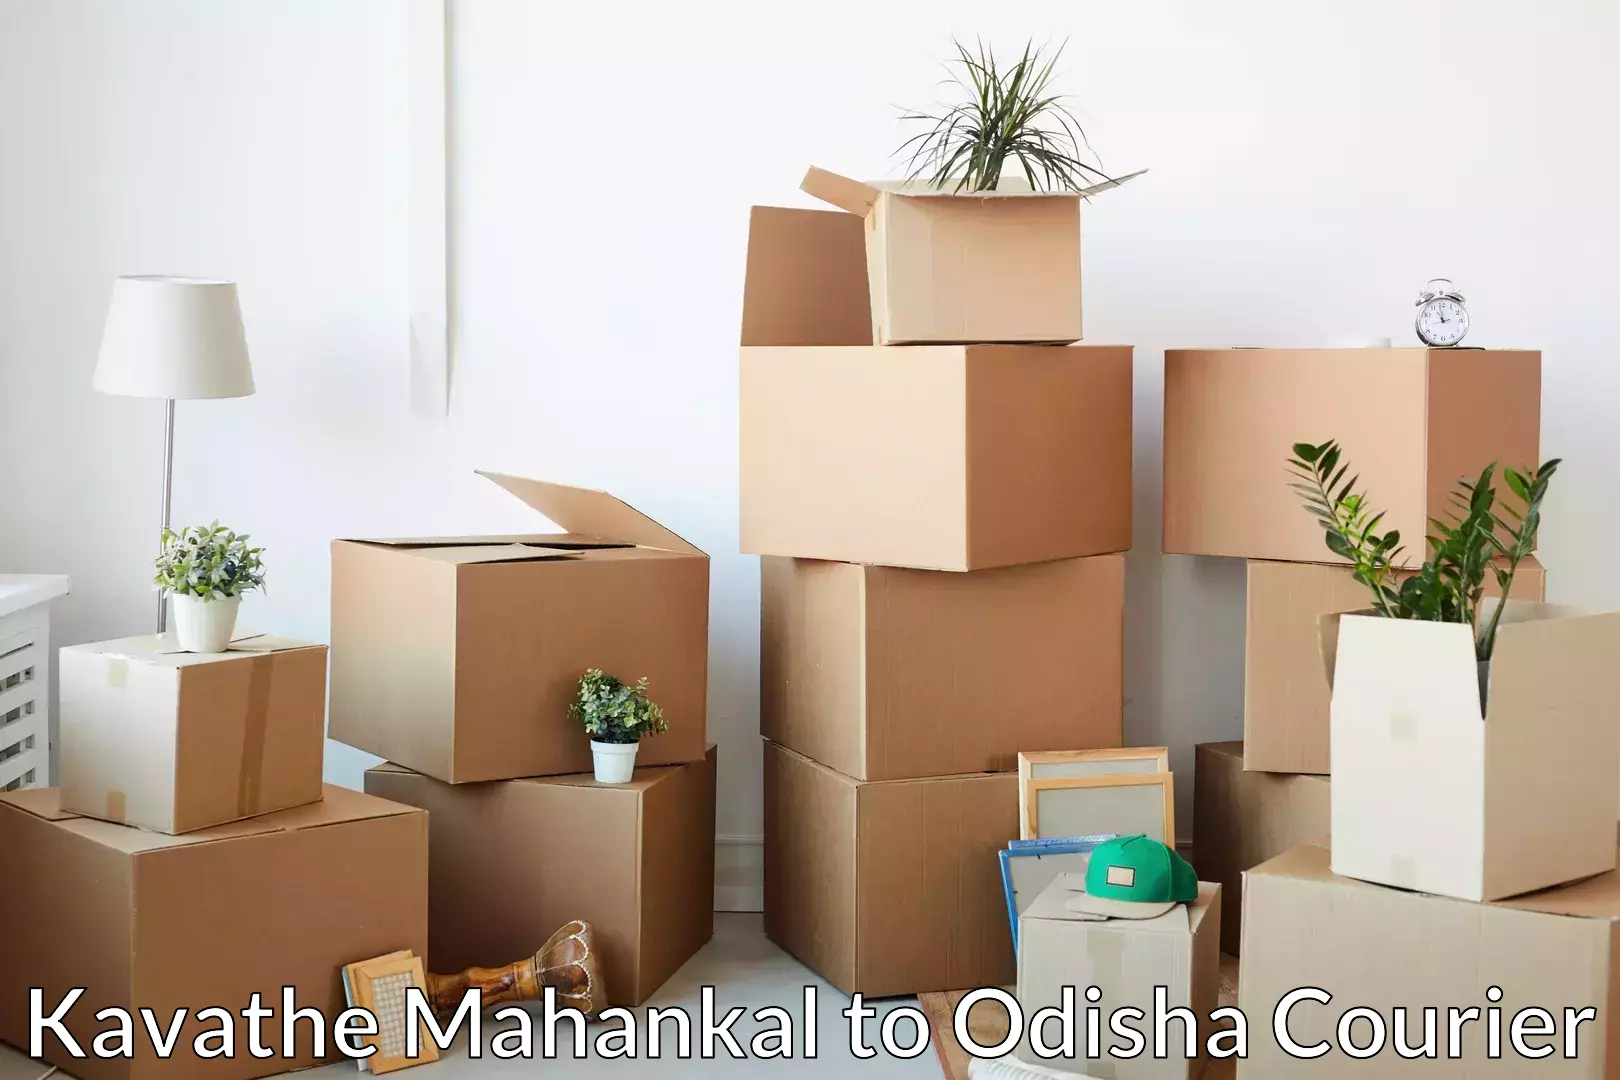 Professional moving company Kavathe Mahankal to Sukinda